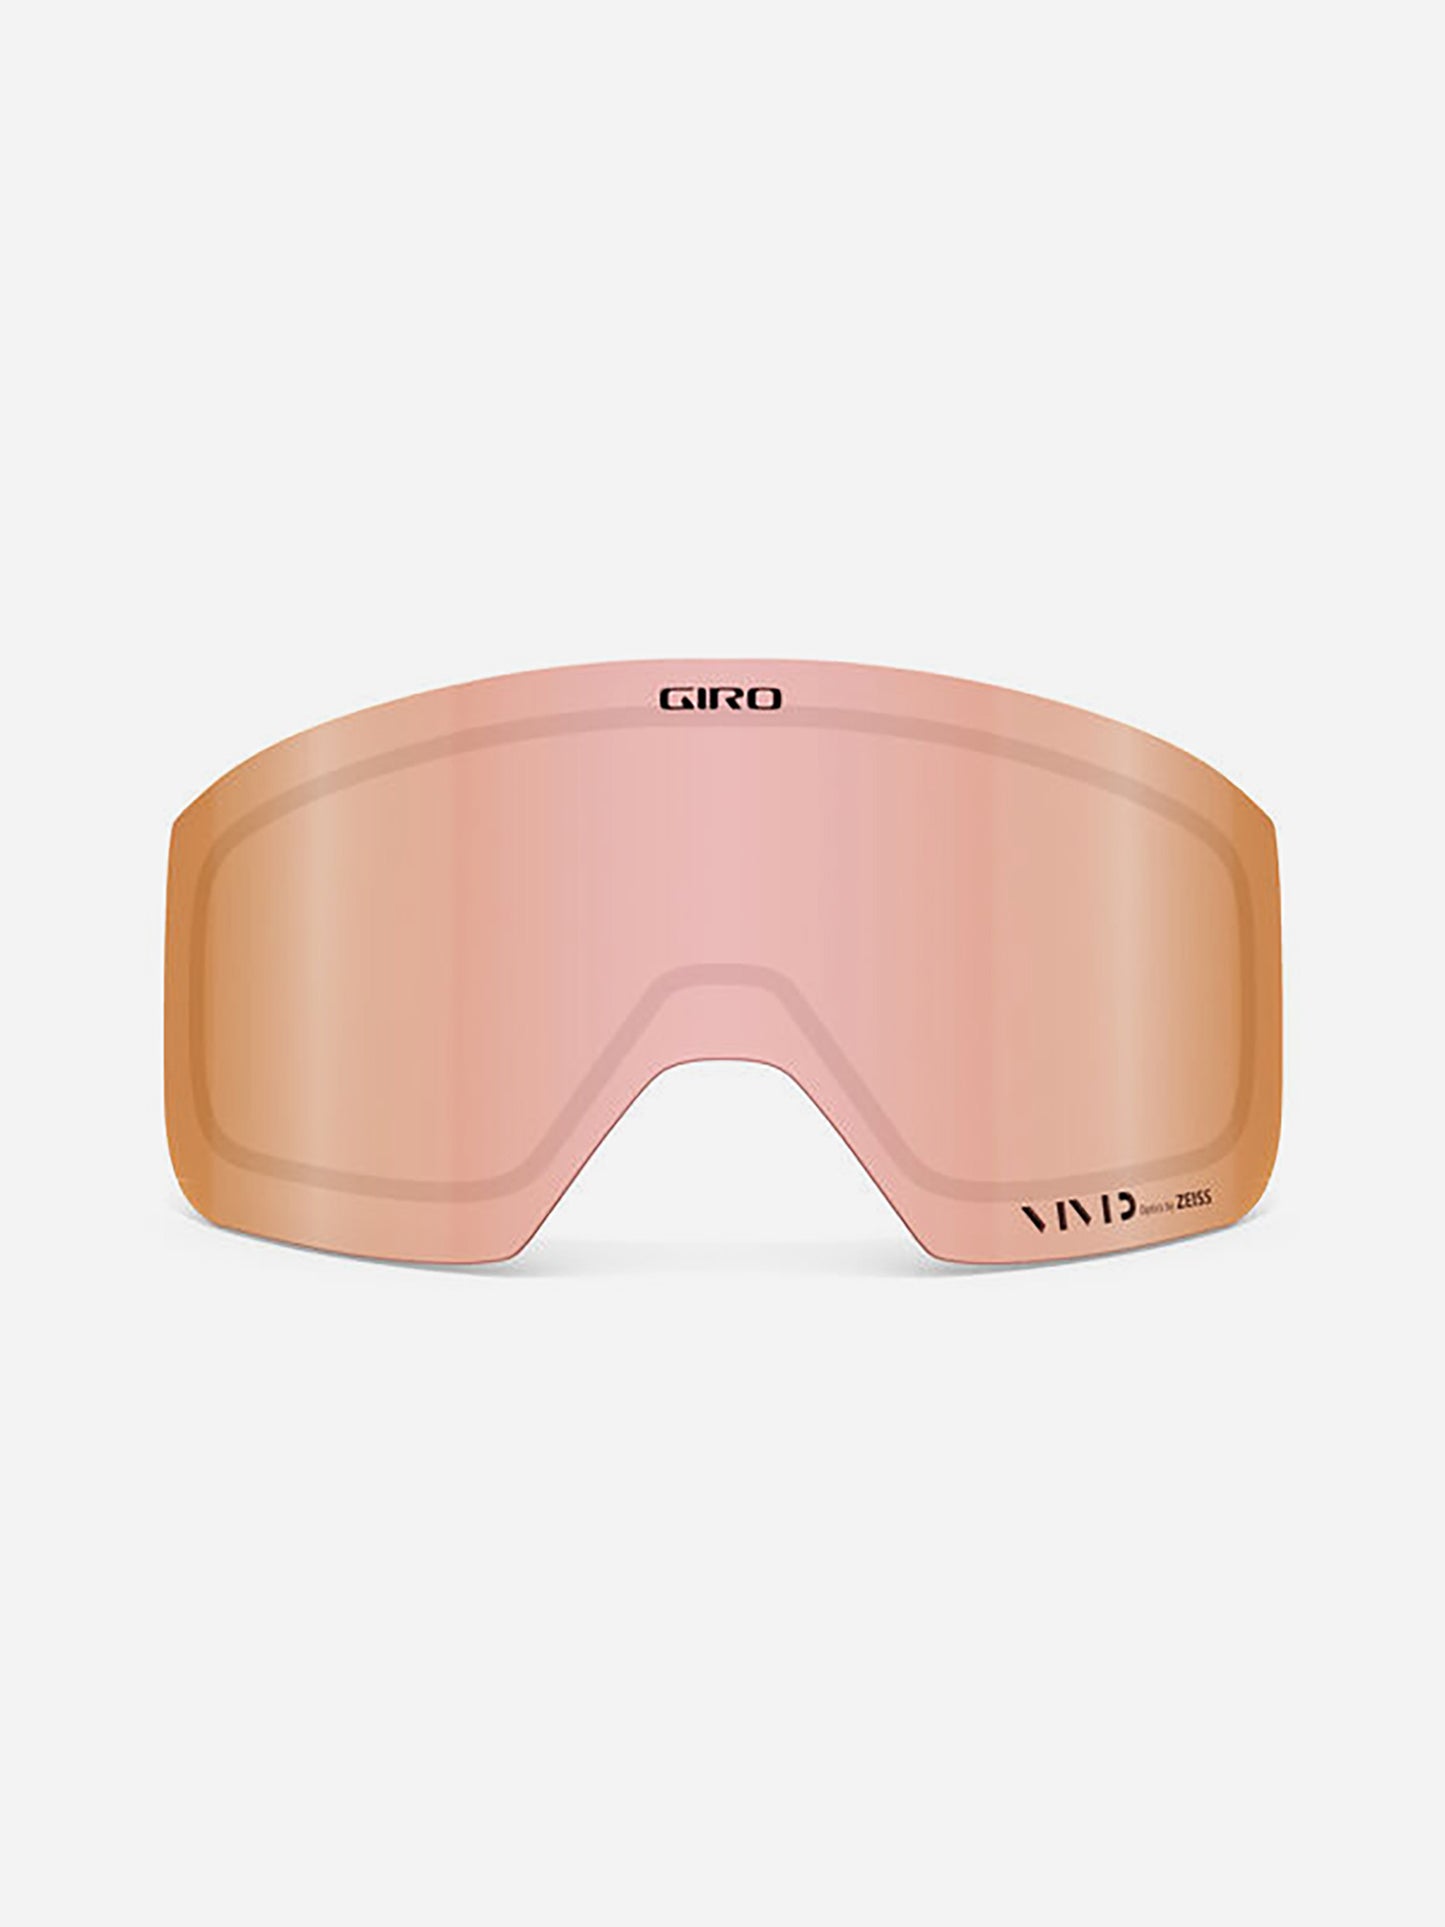 GIRO Axis/Ella Goggle Replacement Lens